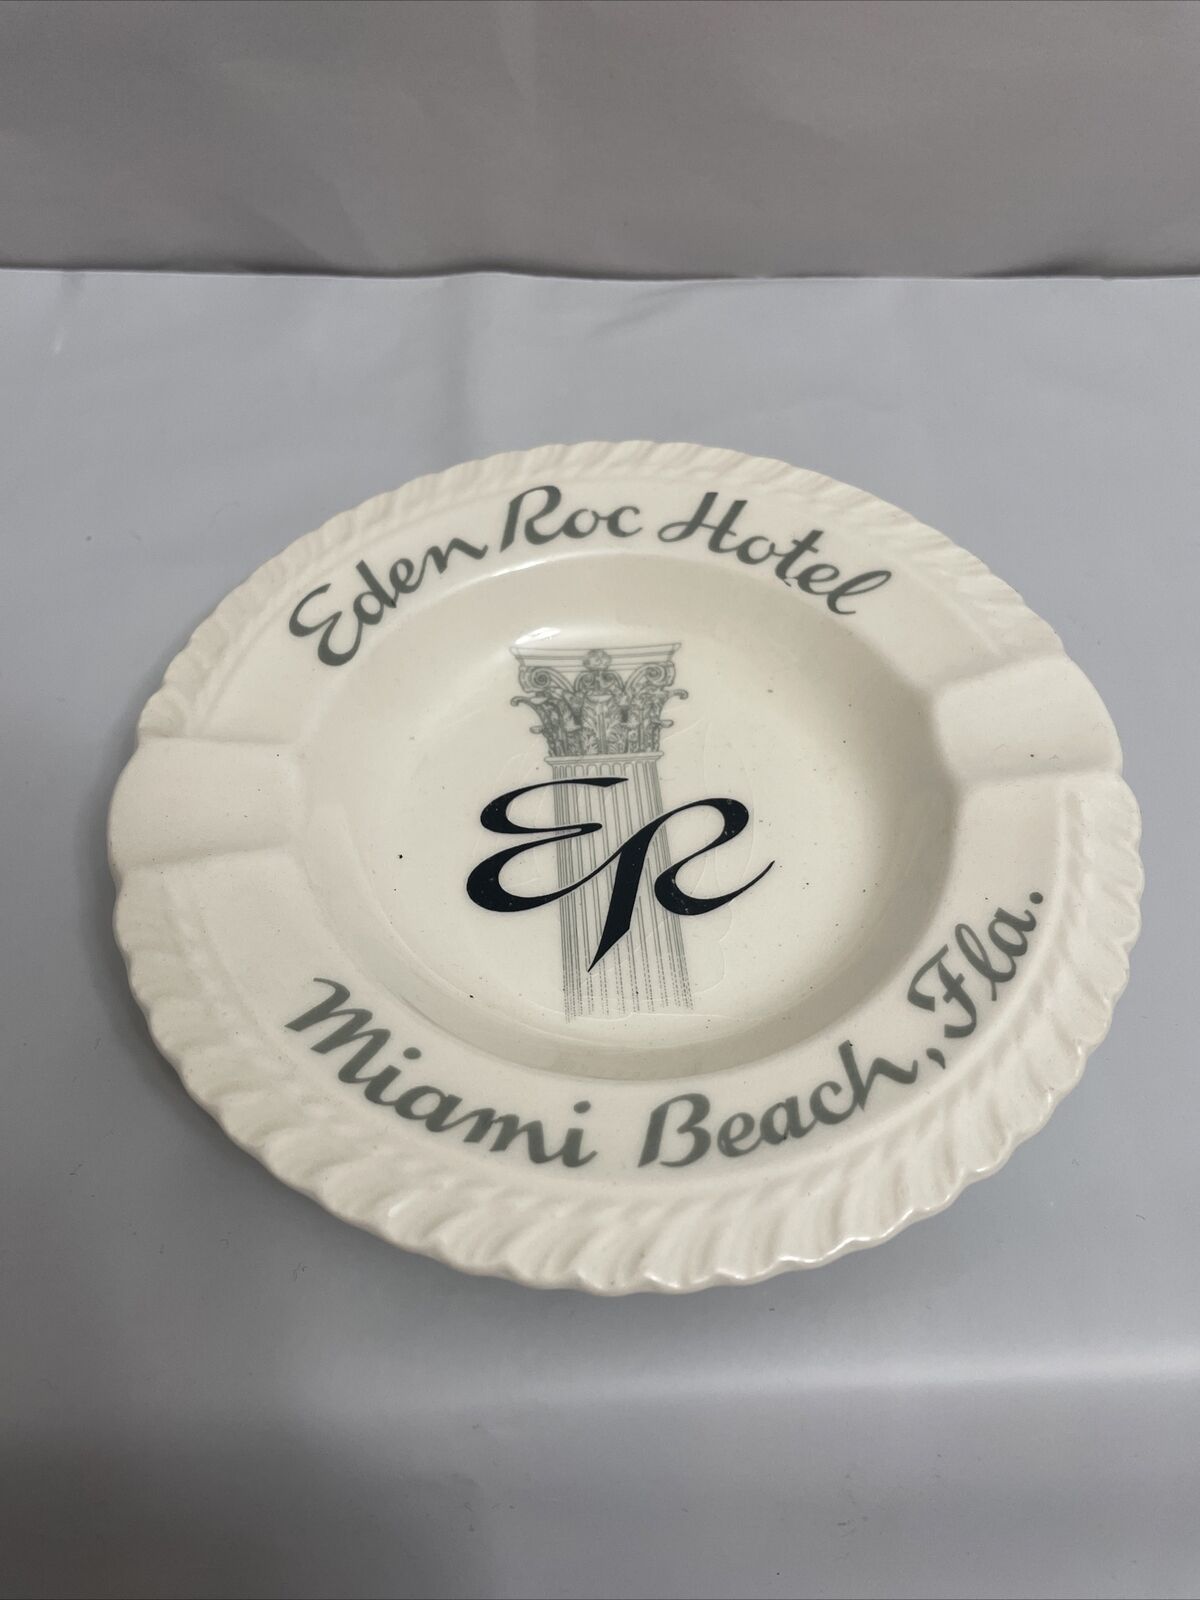 Harkerware Eden Roc Miami Beach Fla Ashtray harker pottery vintage florida